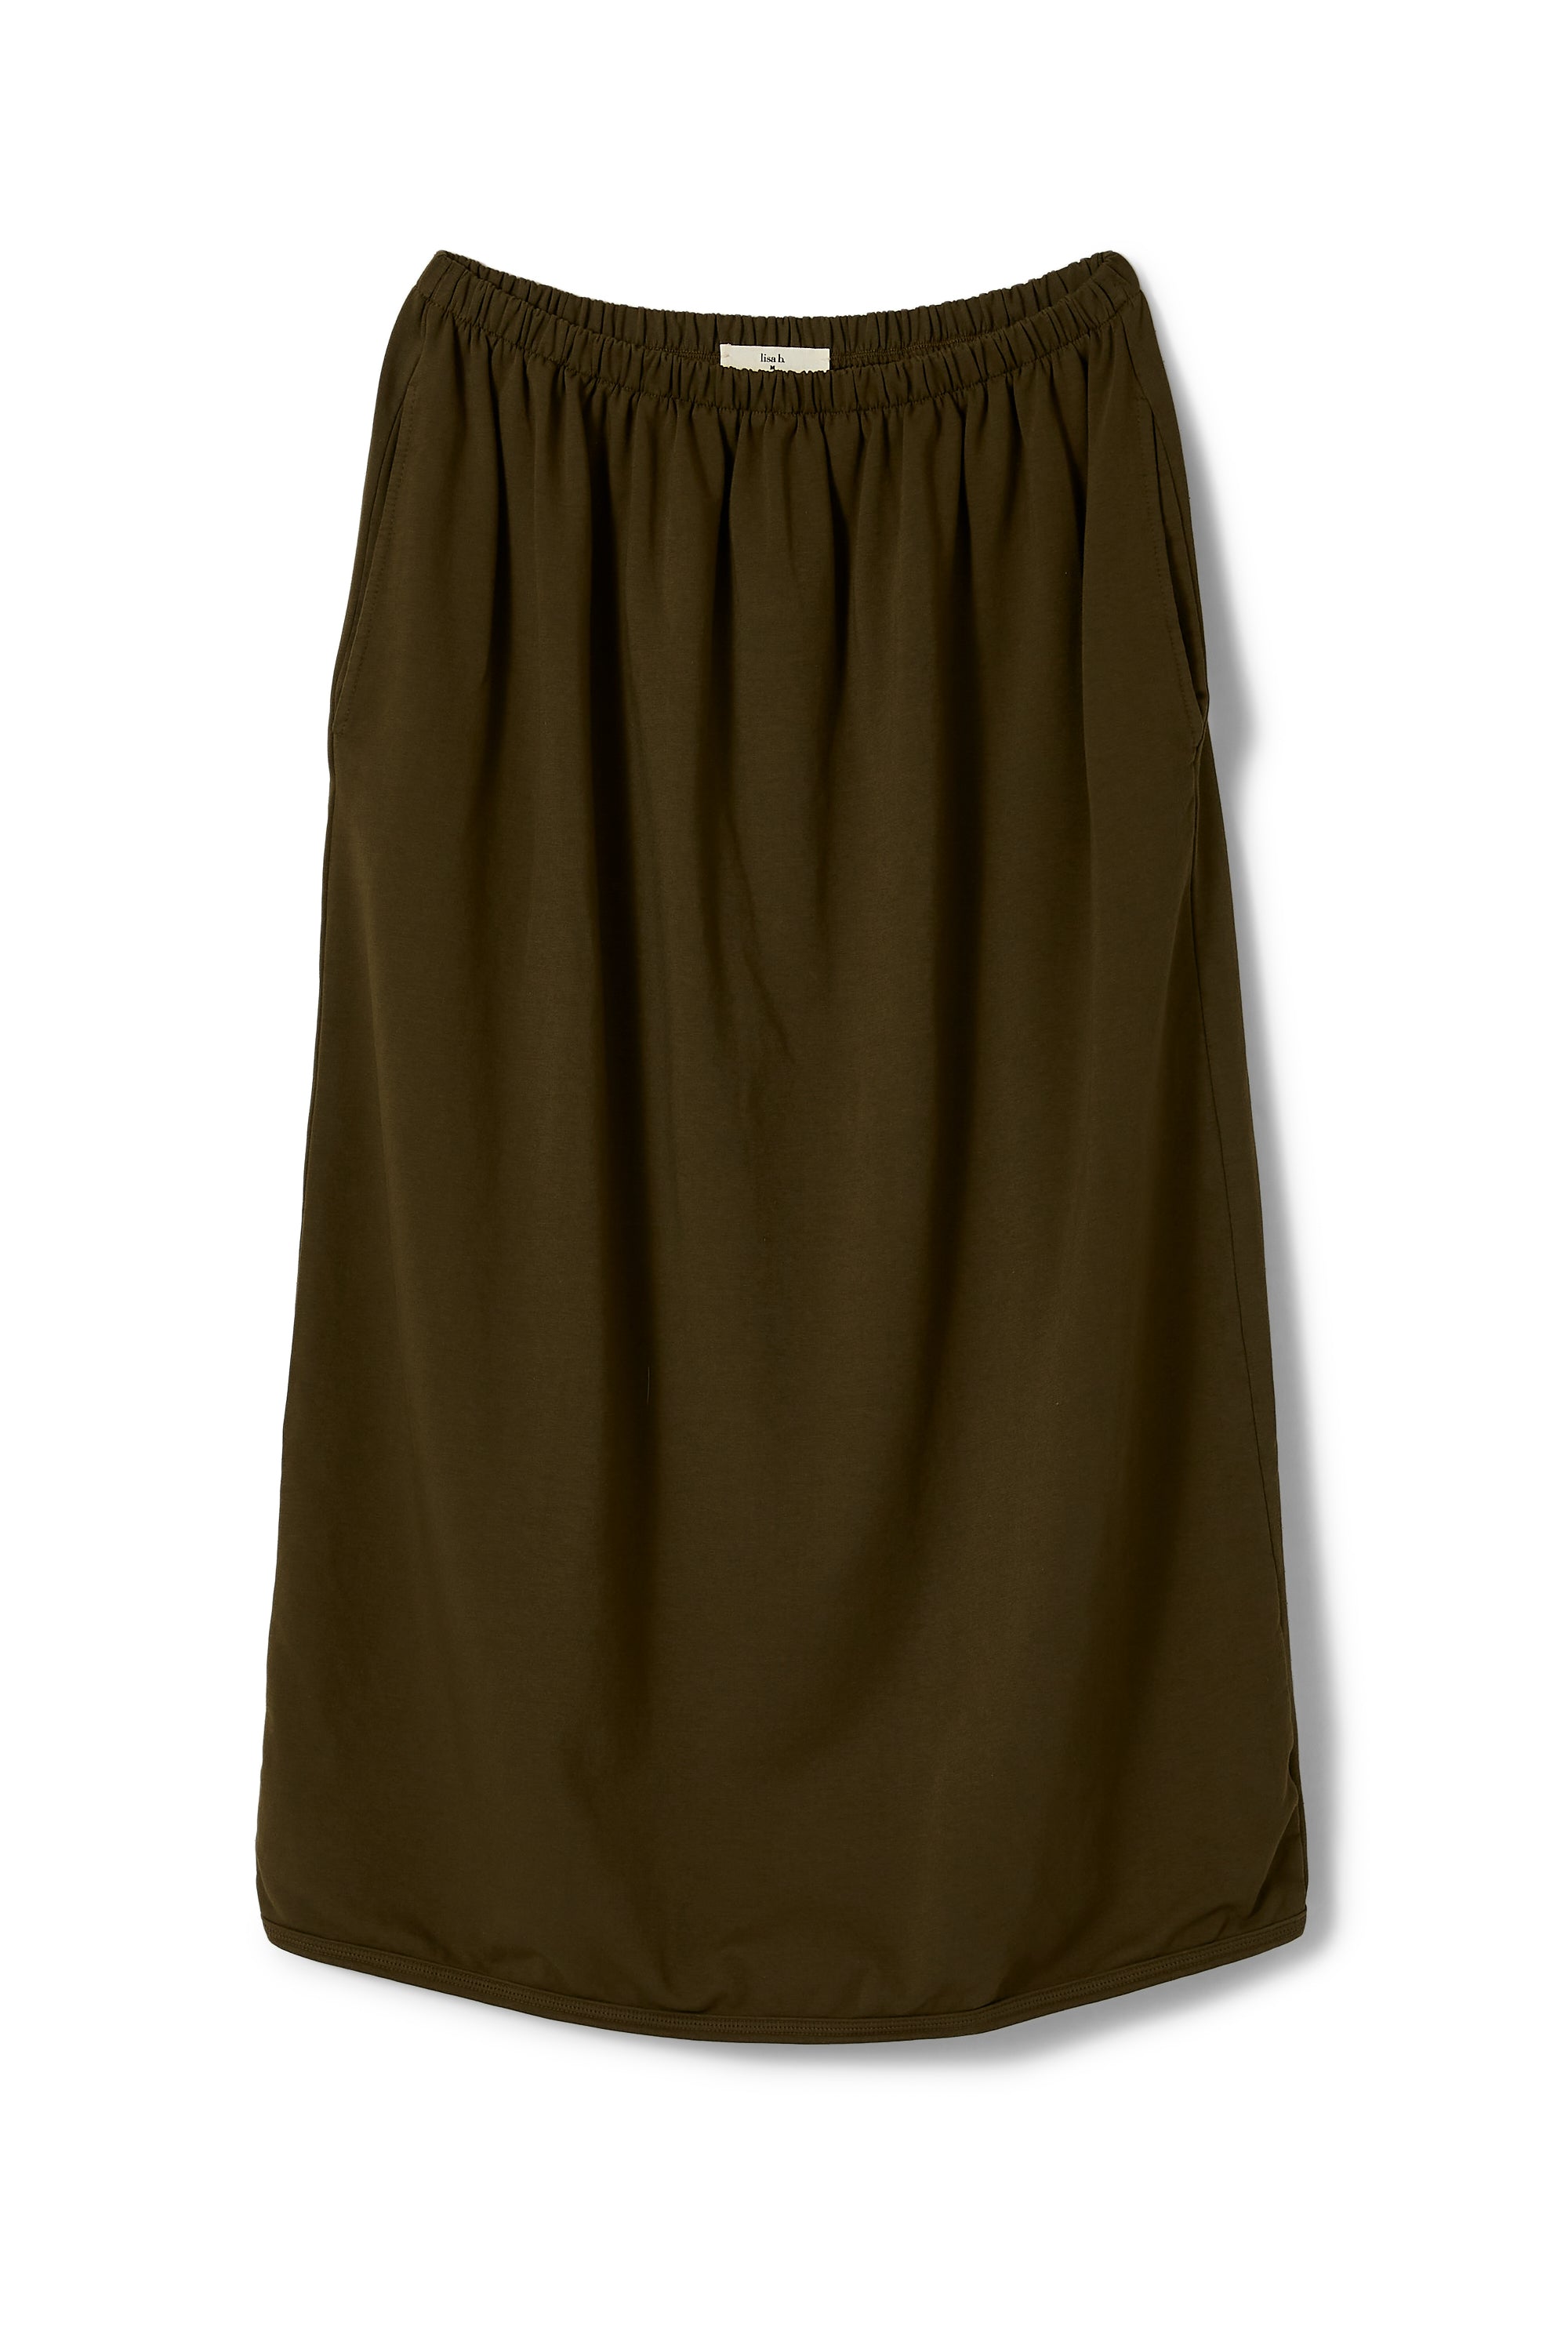 lisa b. cotton skirt in olive